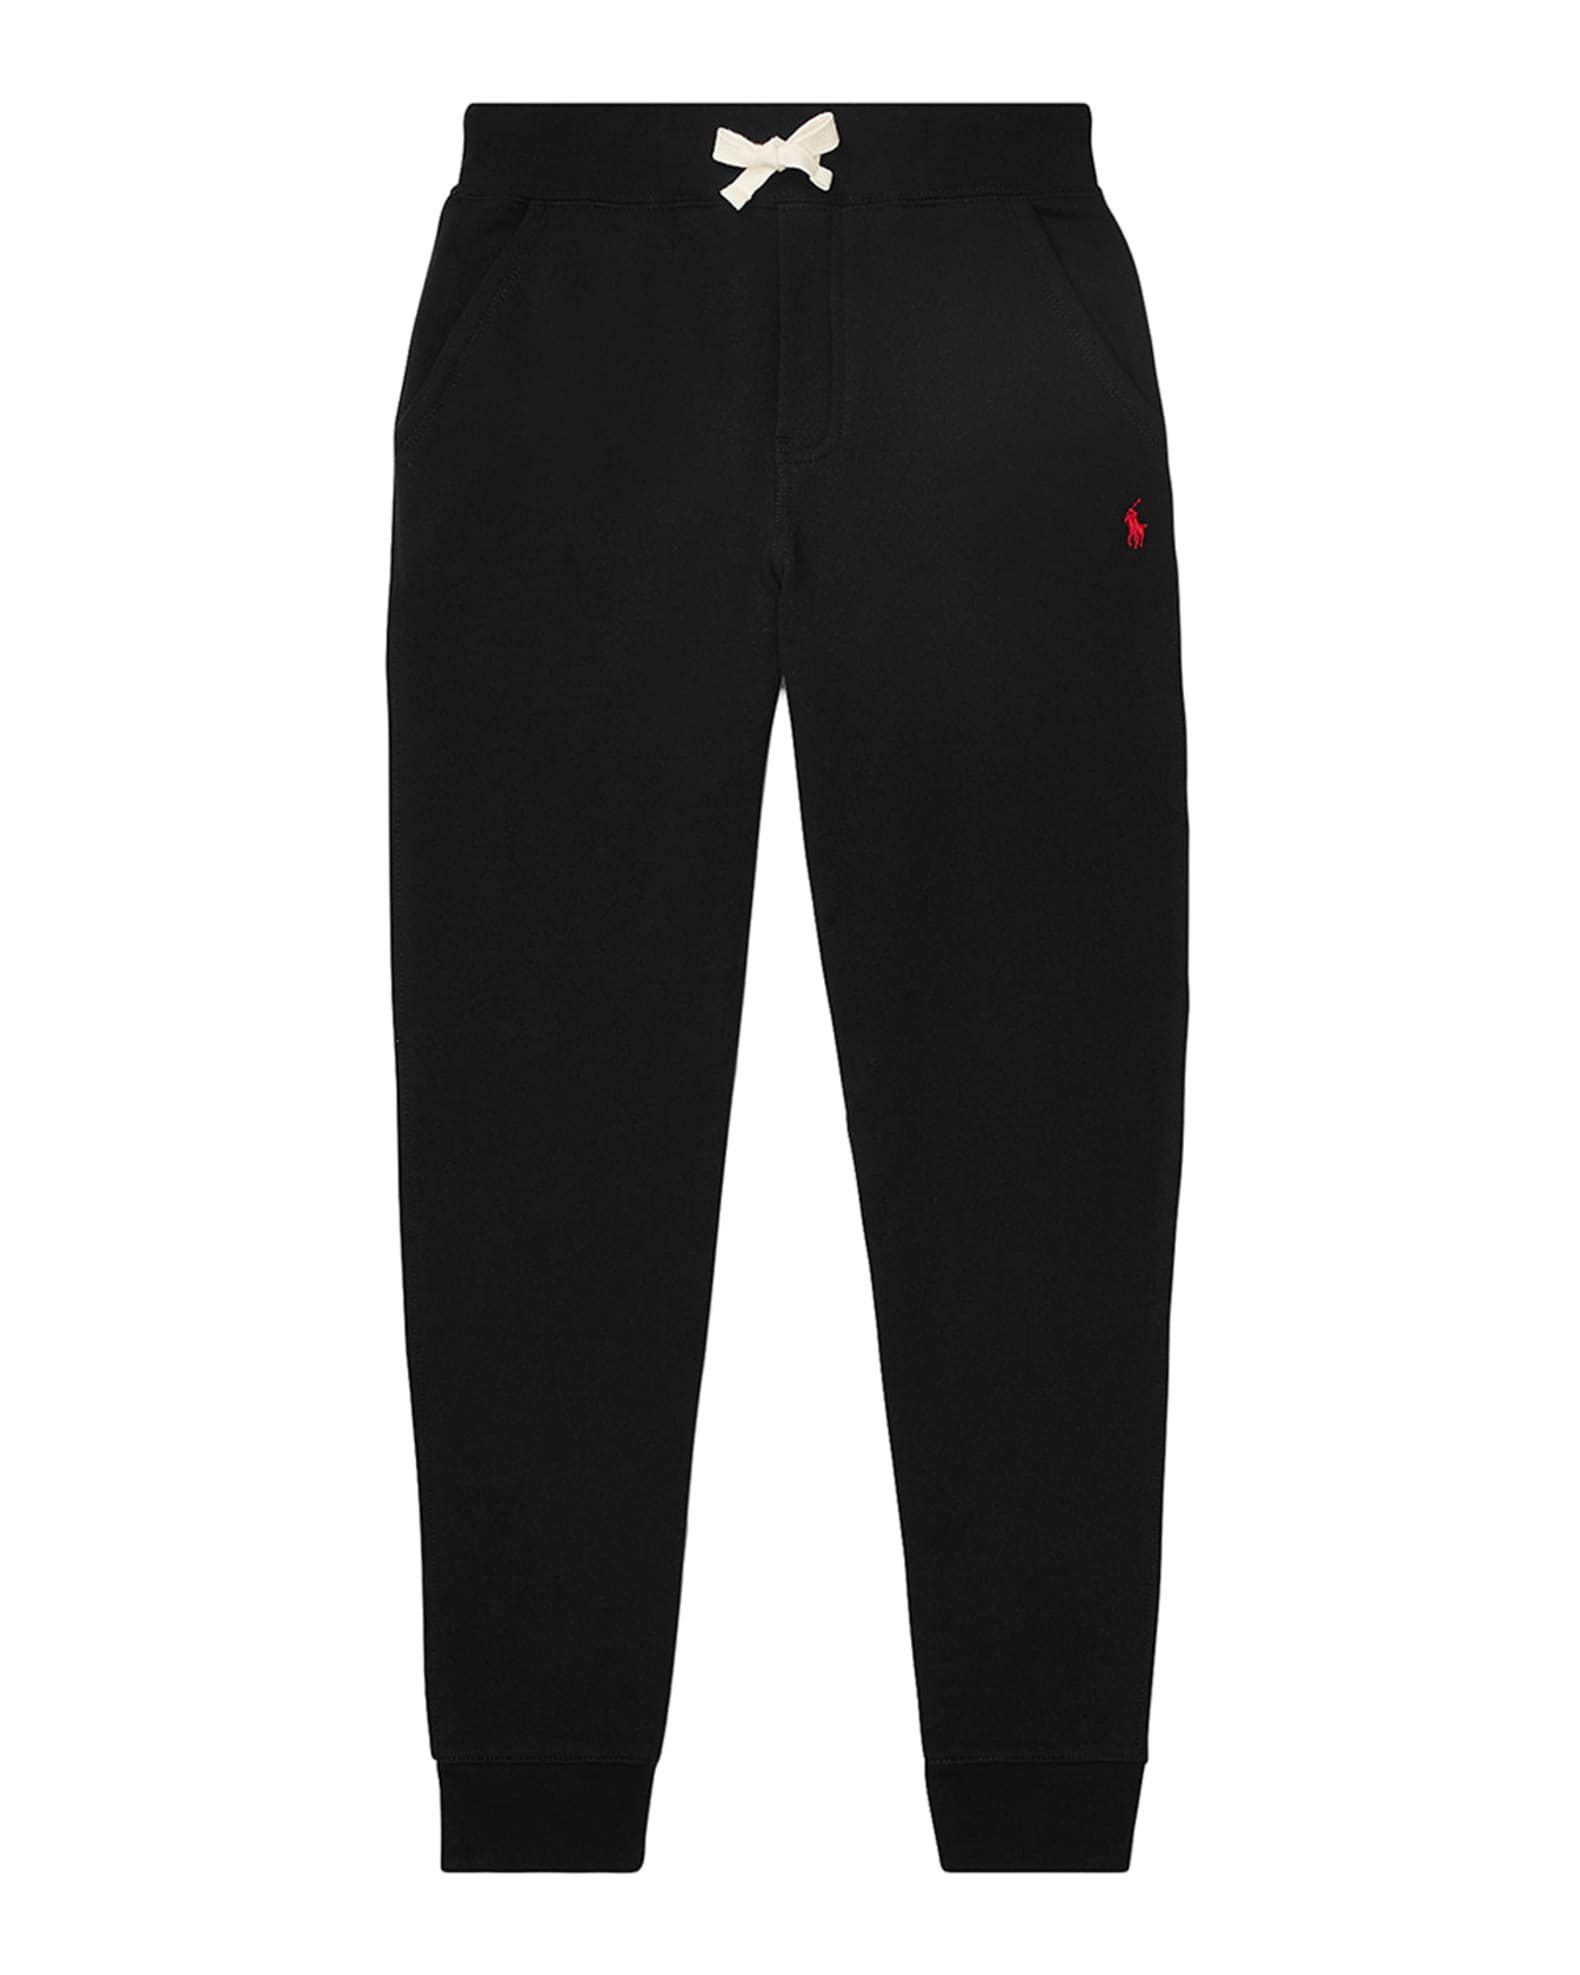 Ralph Lauren Childrenswear Boy's Fleece Jogger Pants, Size S-XL ...